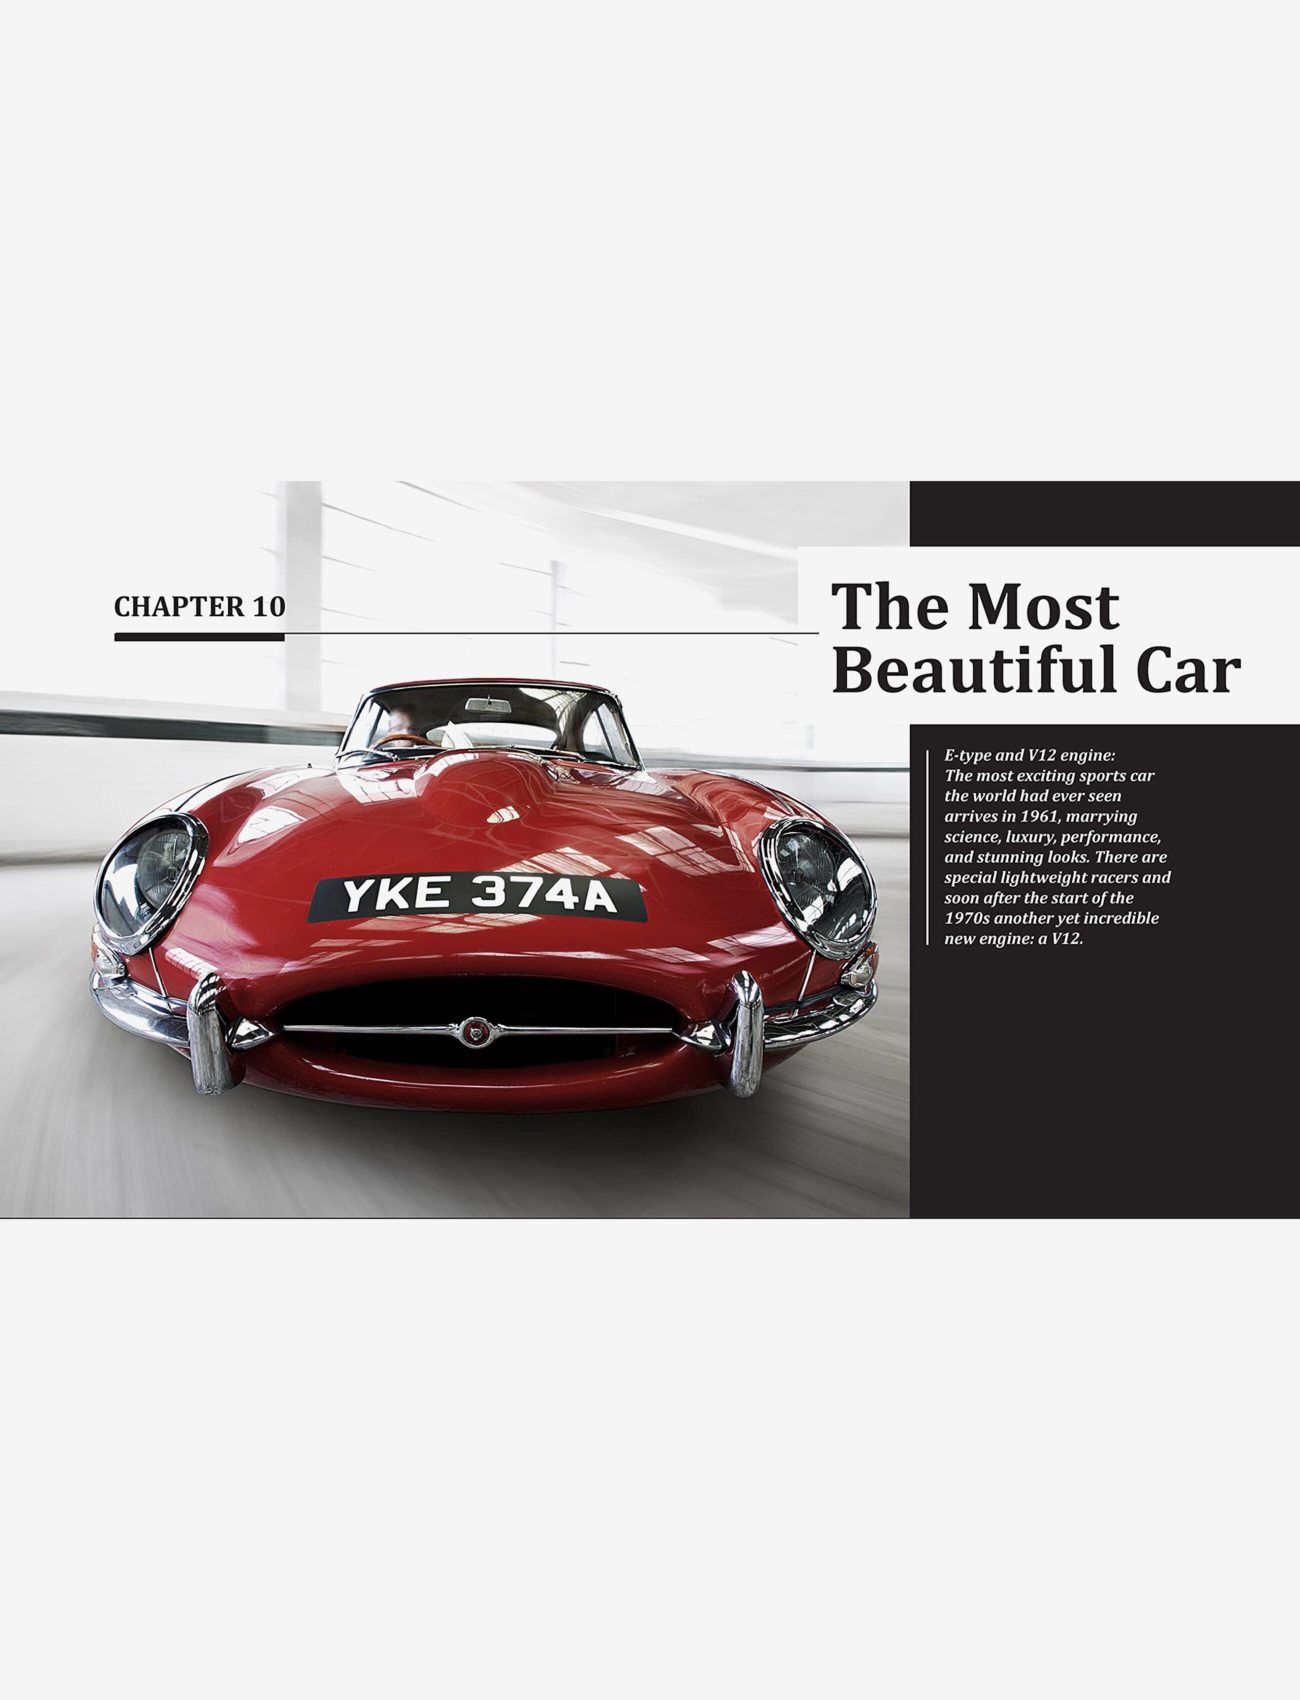 New Mags - Jaguar Century: 100 Years of Automotive Excellence - geburtstagsgeschenke - dark green - 1